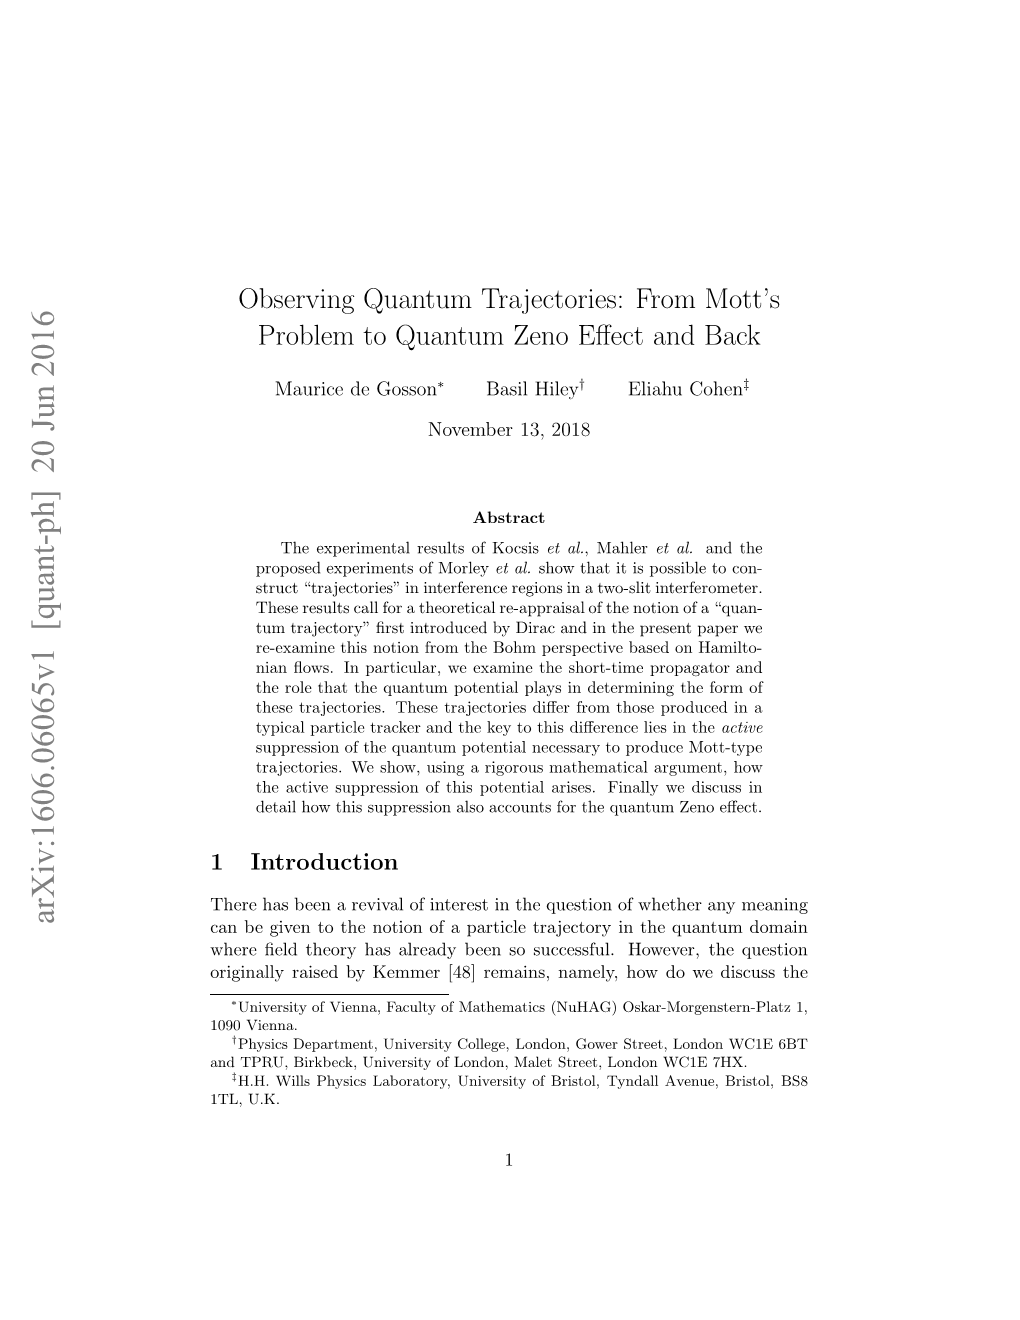 Observing Quantum Trajectories: from Mott's Problem to Quantum Zeno Effect and Back